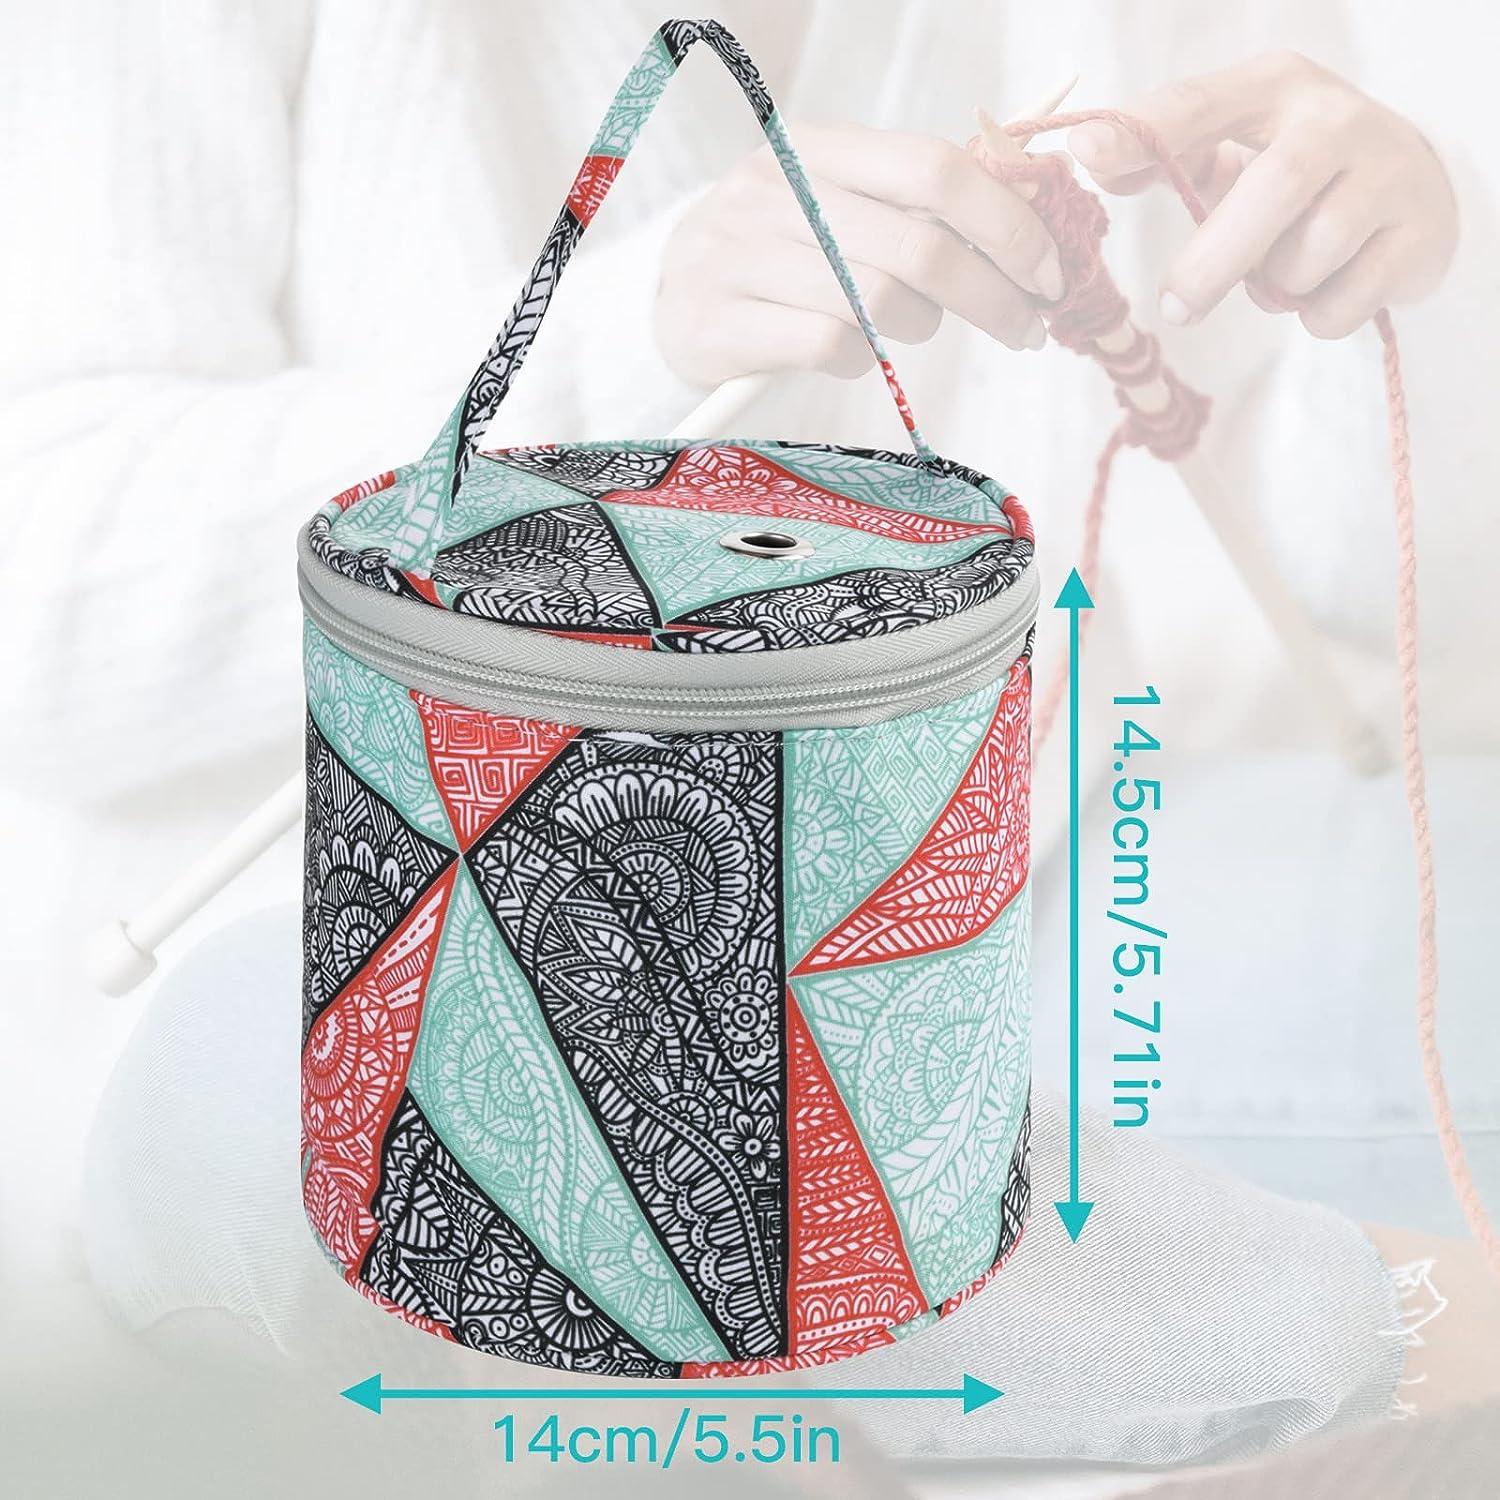 54 FREE Knit Bag Patterns | Marly Bird